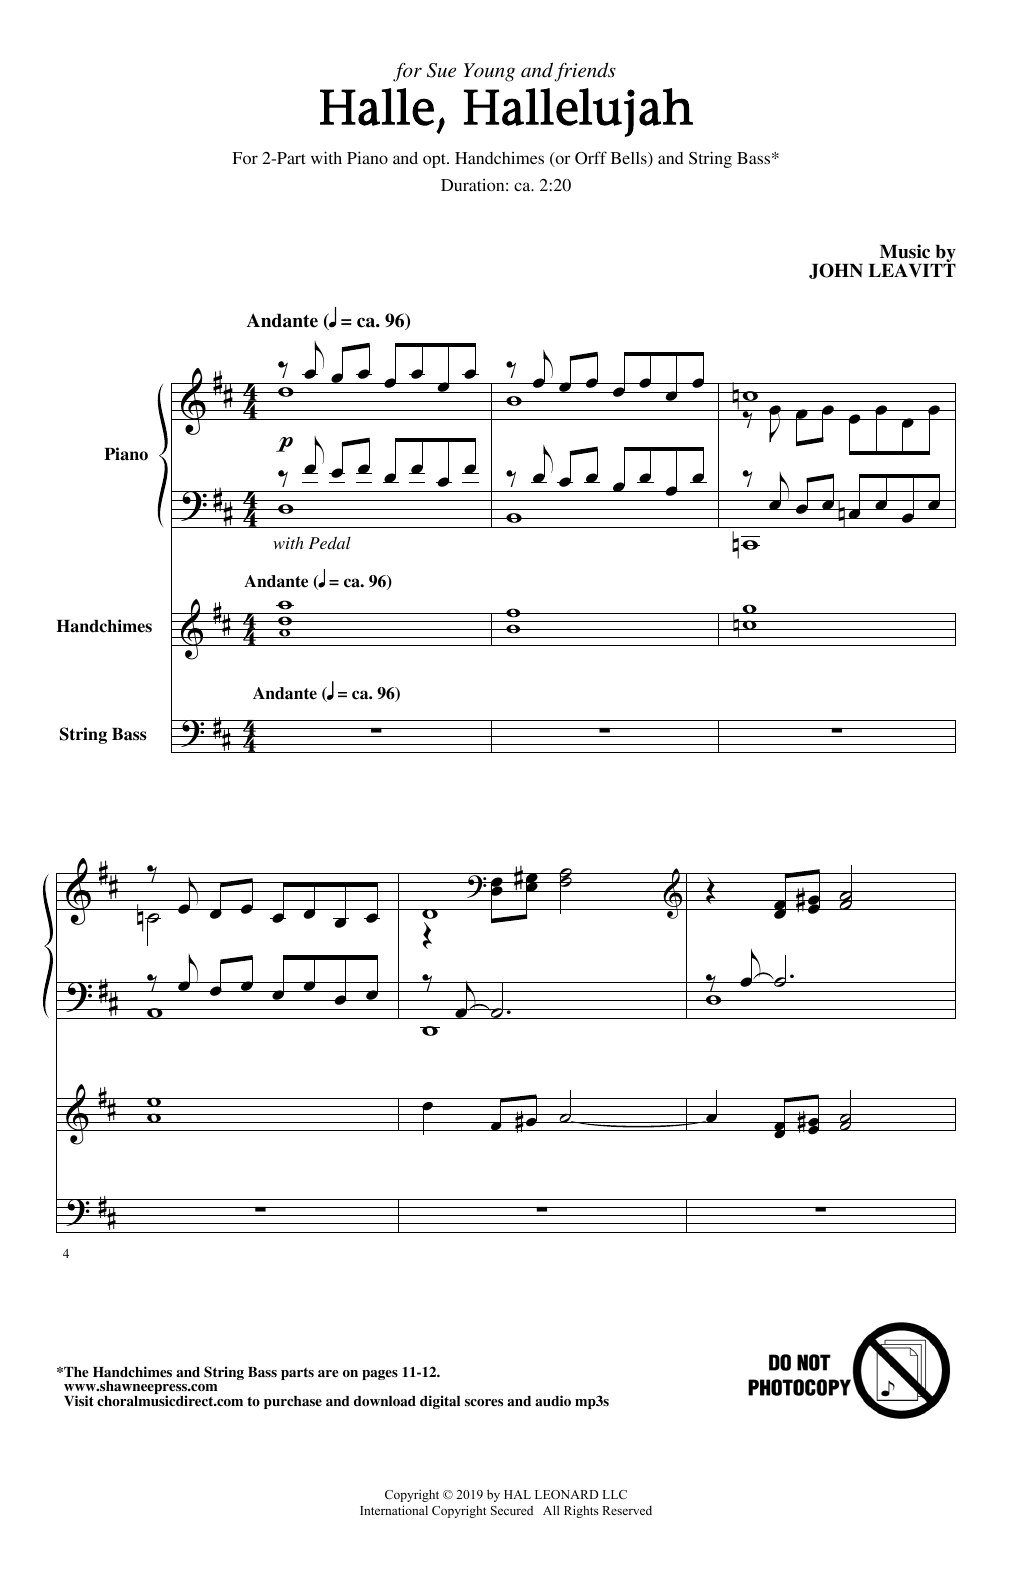 John Leavitt Halle, Hallelujah Sheet Music Notes & Chords for SAB Choir - Download or Print PDF